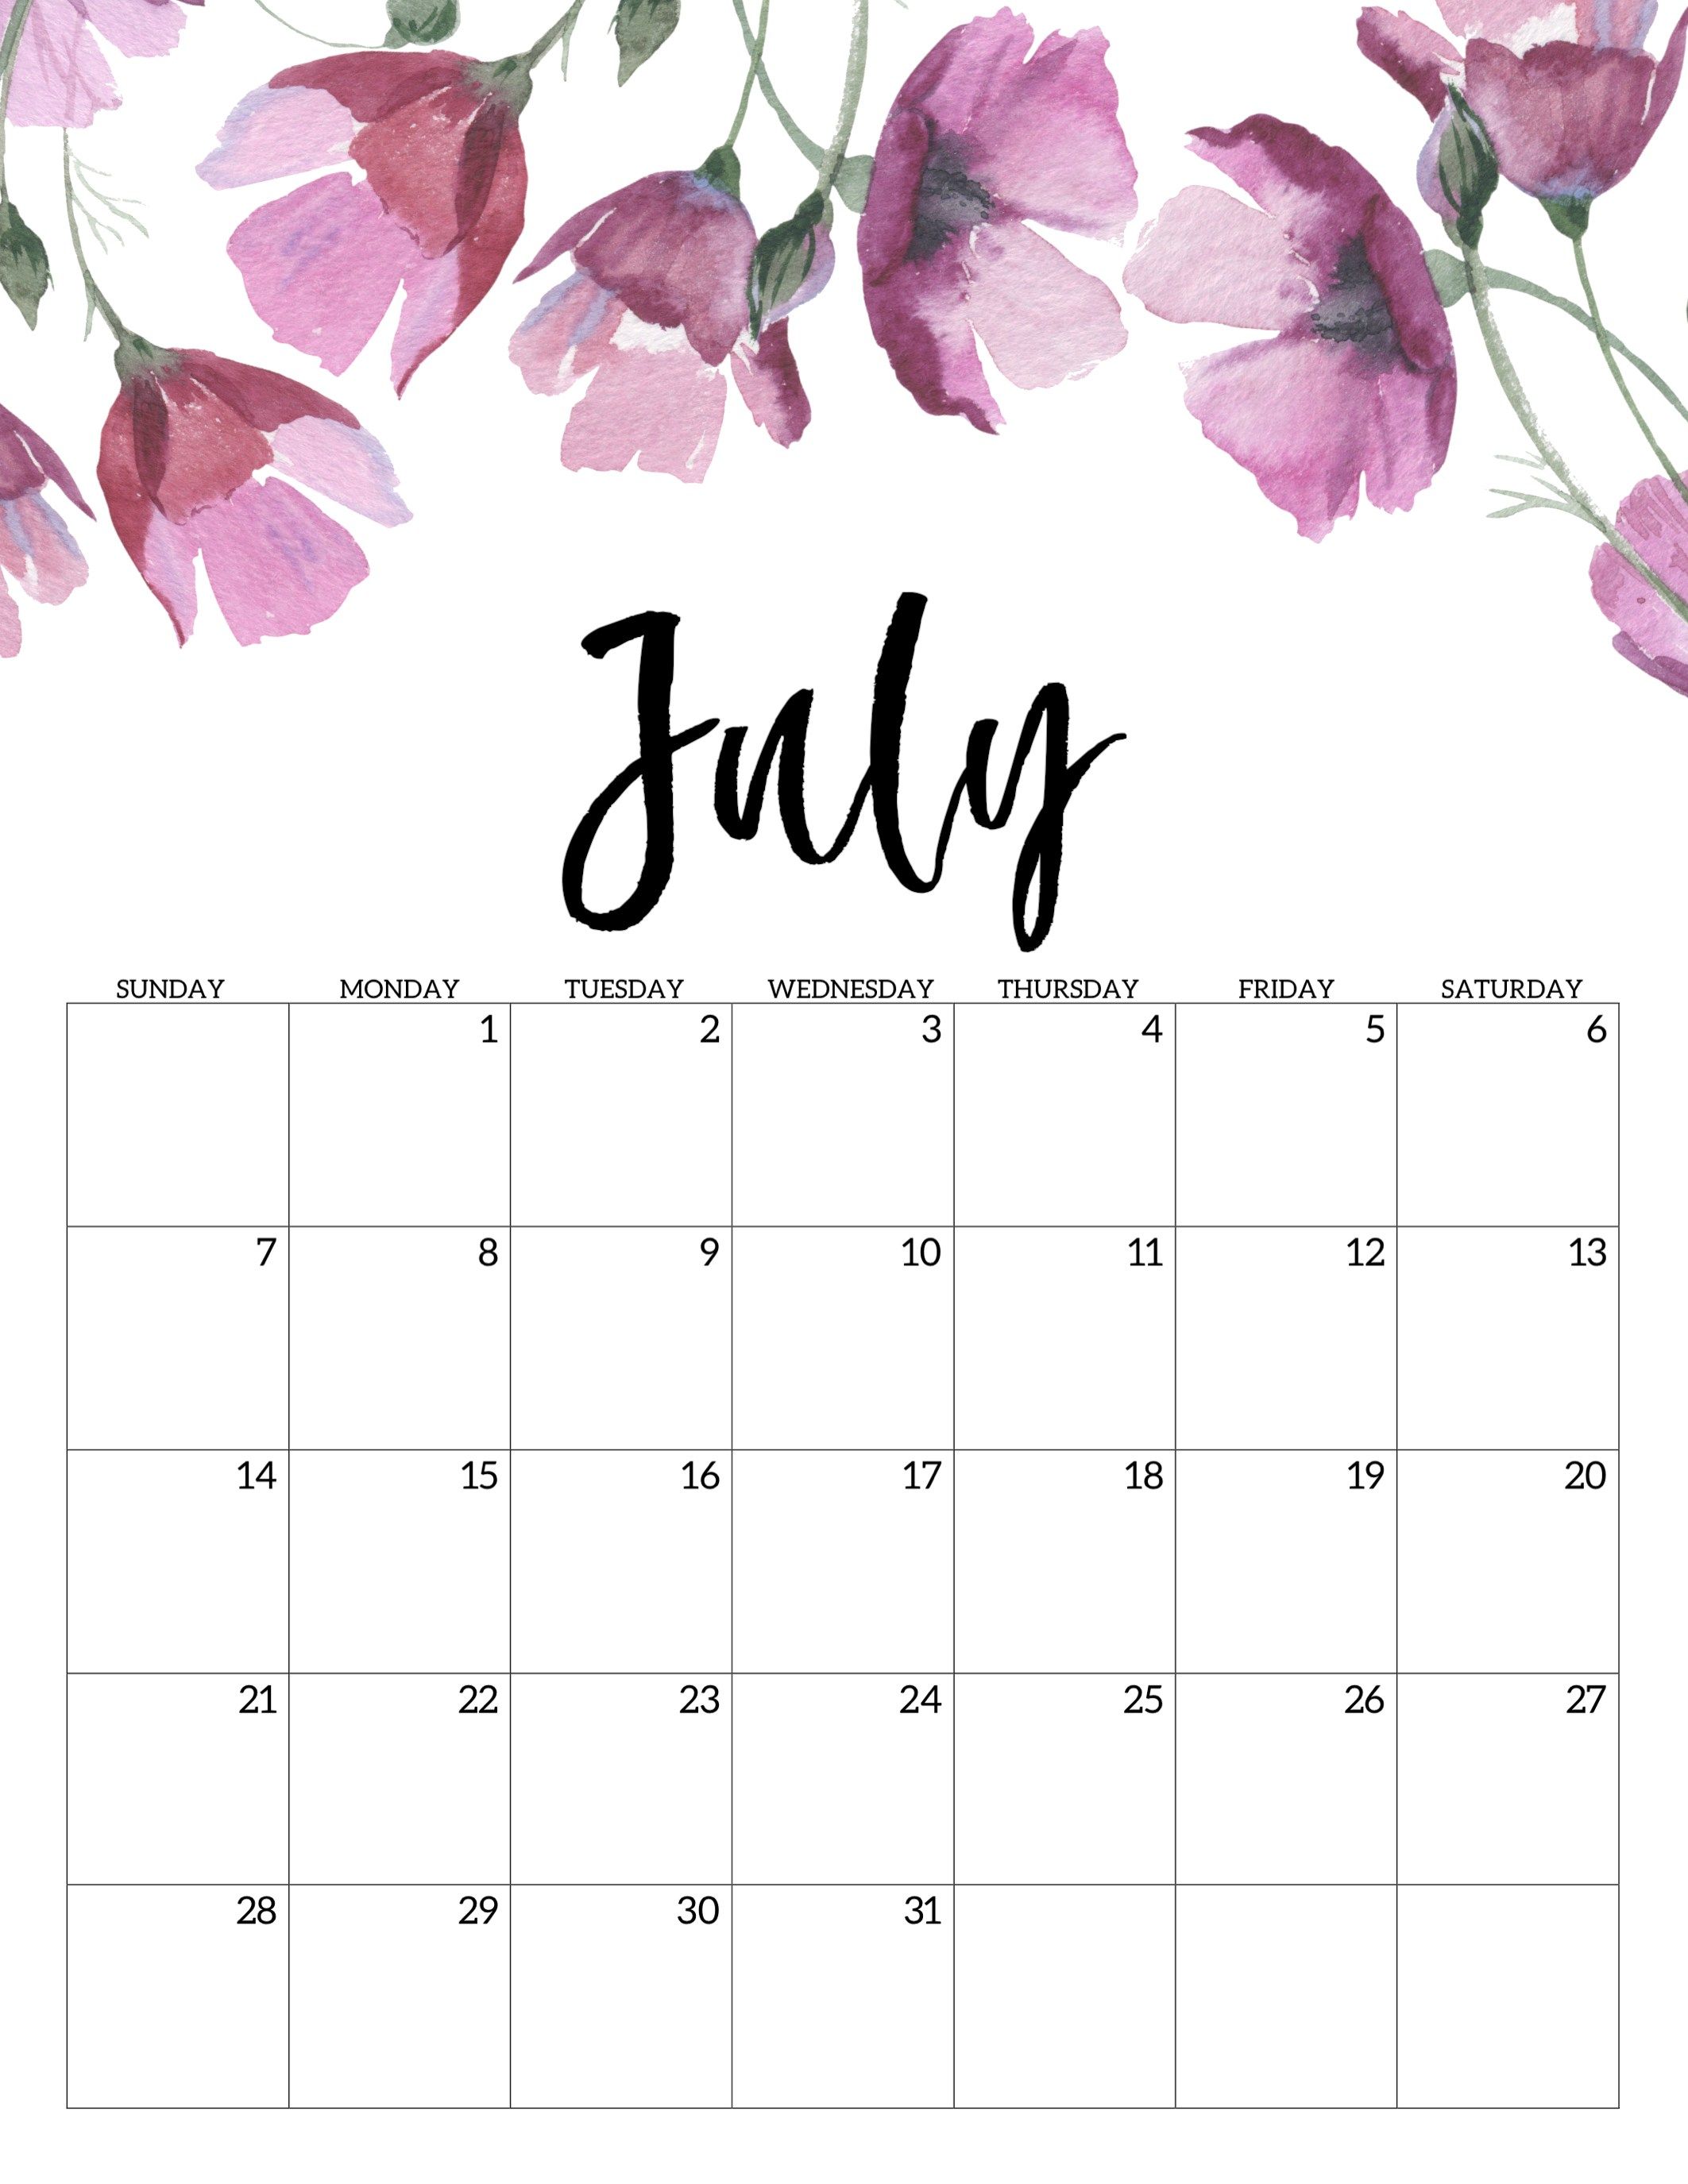 Cute July 2019 Calendar Design - July 2019 Calendar Cute - HD Wallpaper 